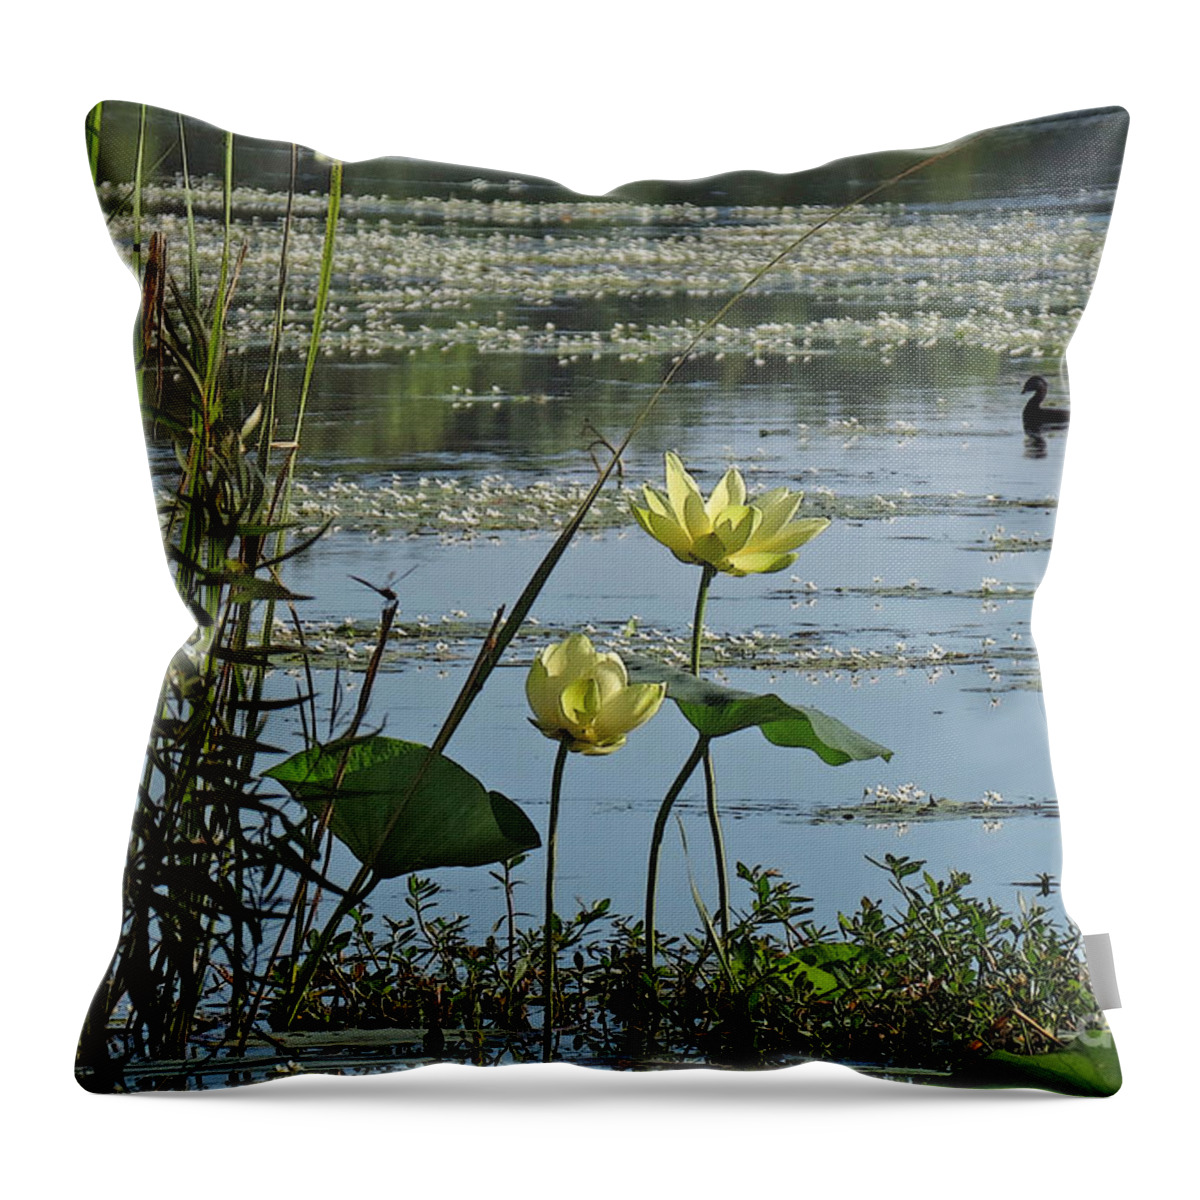 Lotus Throw Pillow featuring the photograph Lake Marion Morning by Deborah Smith